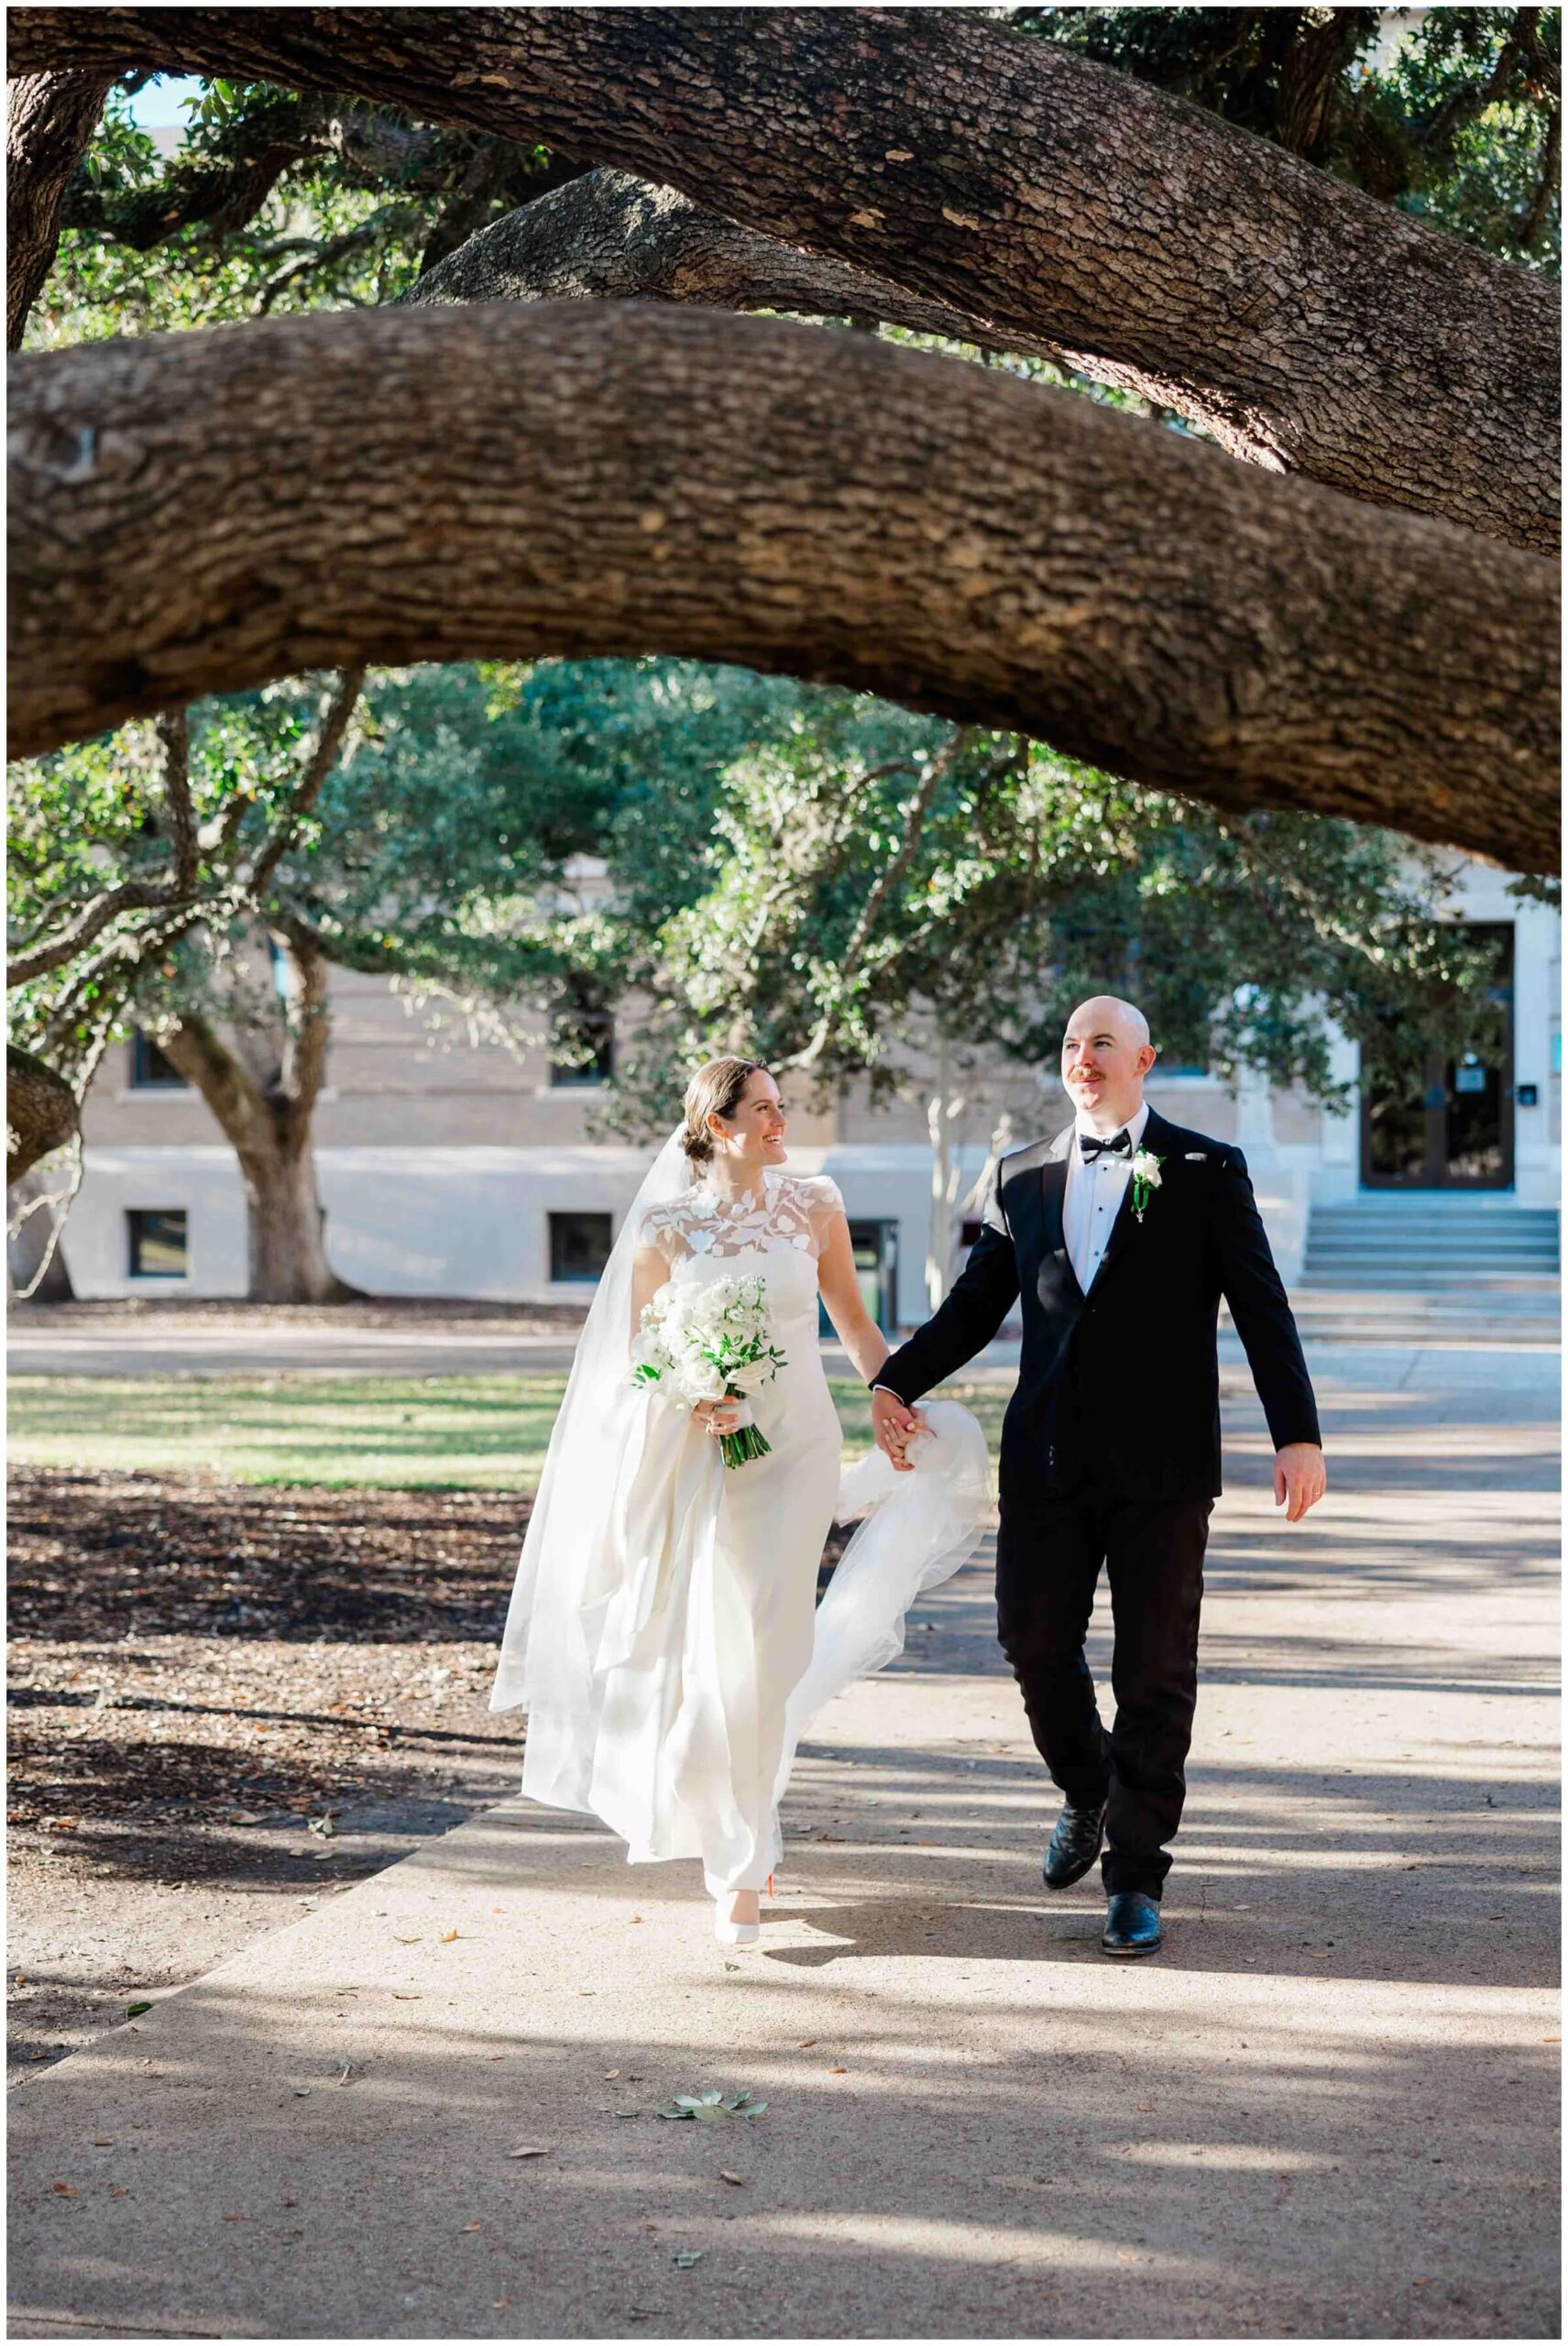 the newlyweds walk under the century tree at Texas A&M University